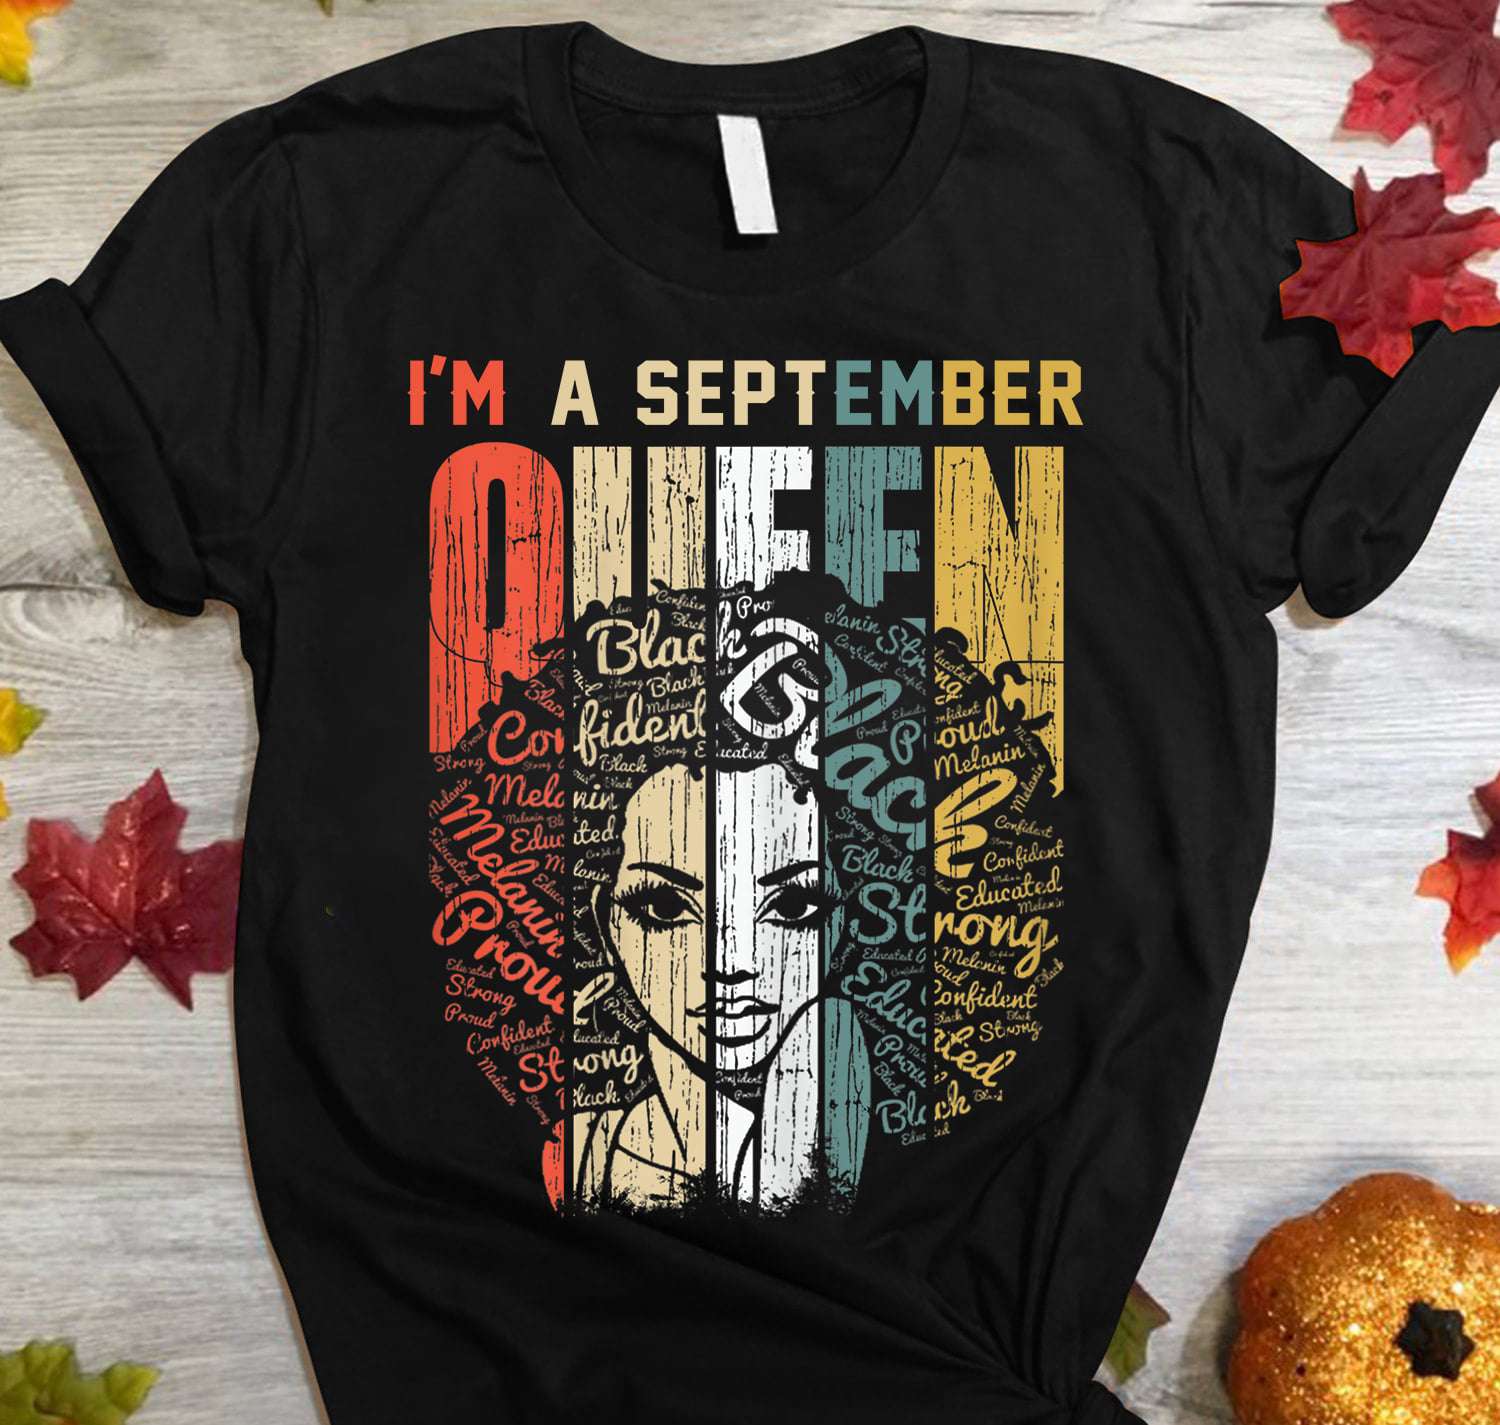 I'm a September queen - Beautiful black women, dope black women